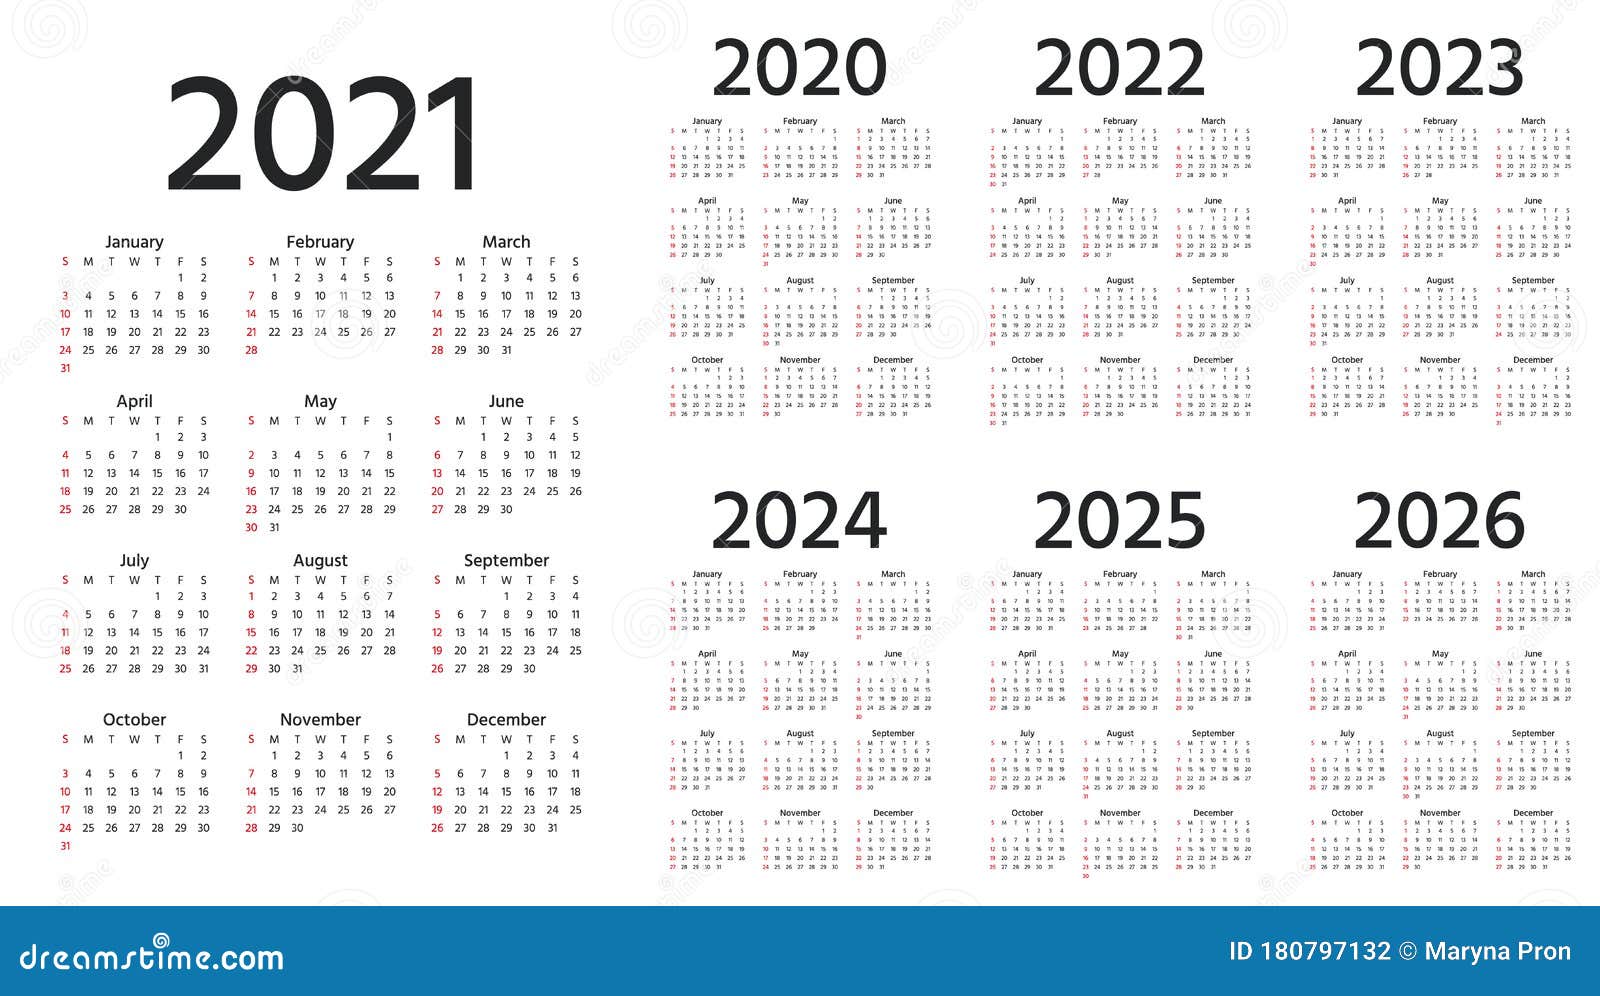 Календарь учителя 2024 2025 год. Календарь 2022 2023 2024. Календарь на 4 года 2021 2022 2023 2024. Календарь 2022-2023 год. Календарь на 2021-2025 года.